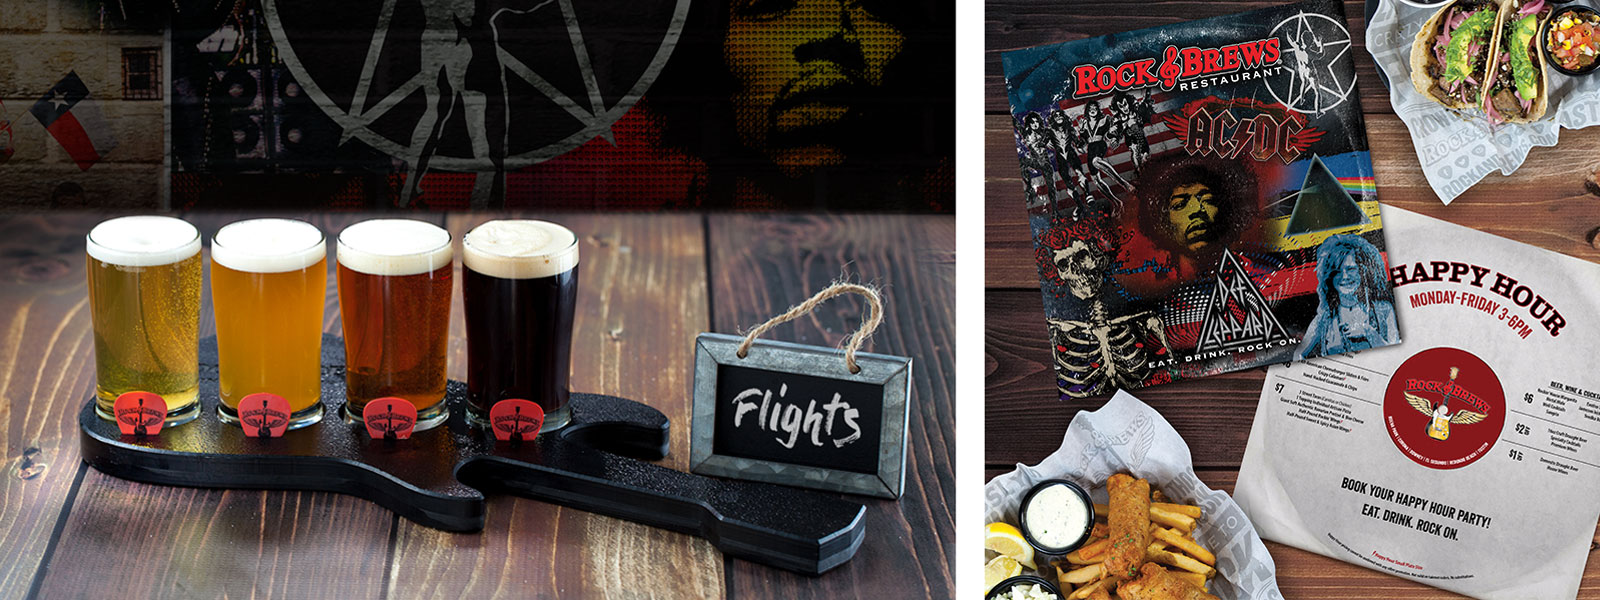 Rock & Brews beer flight and menu design